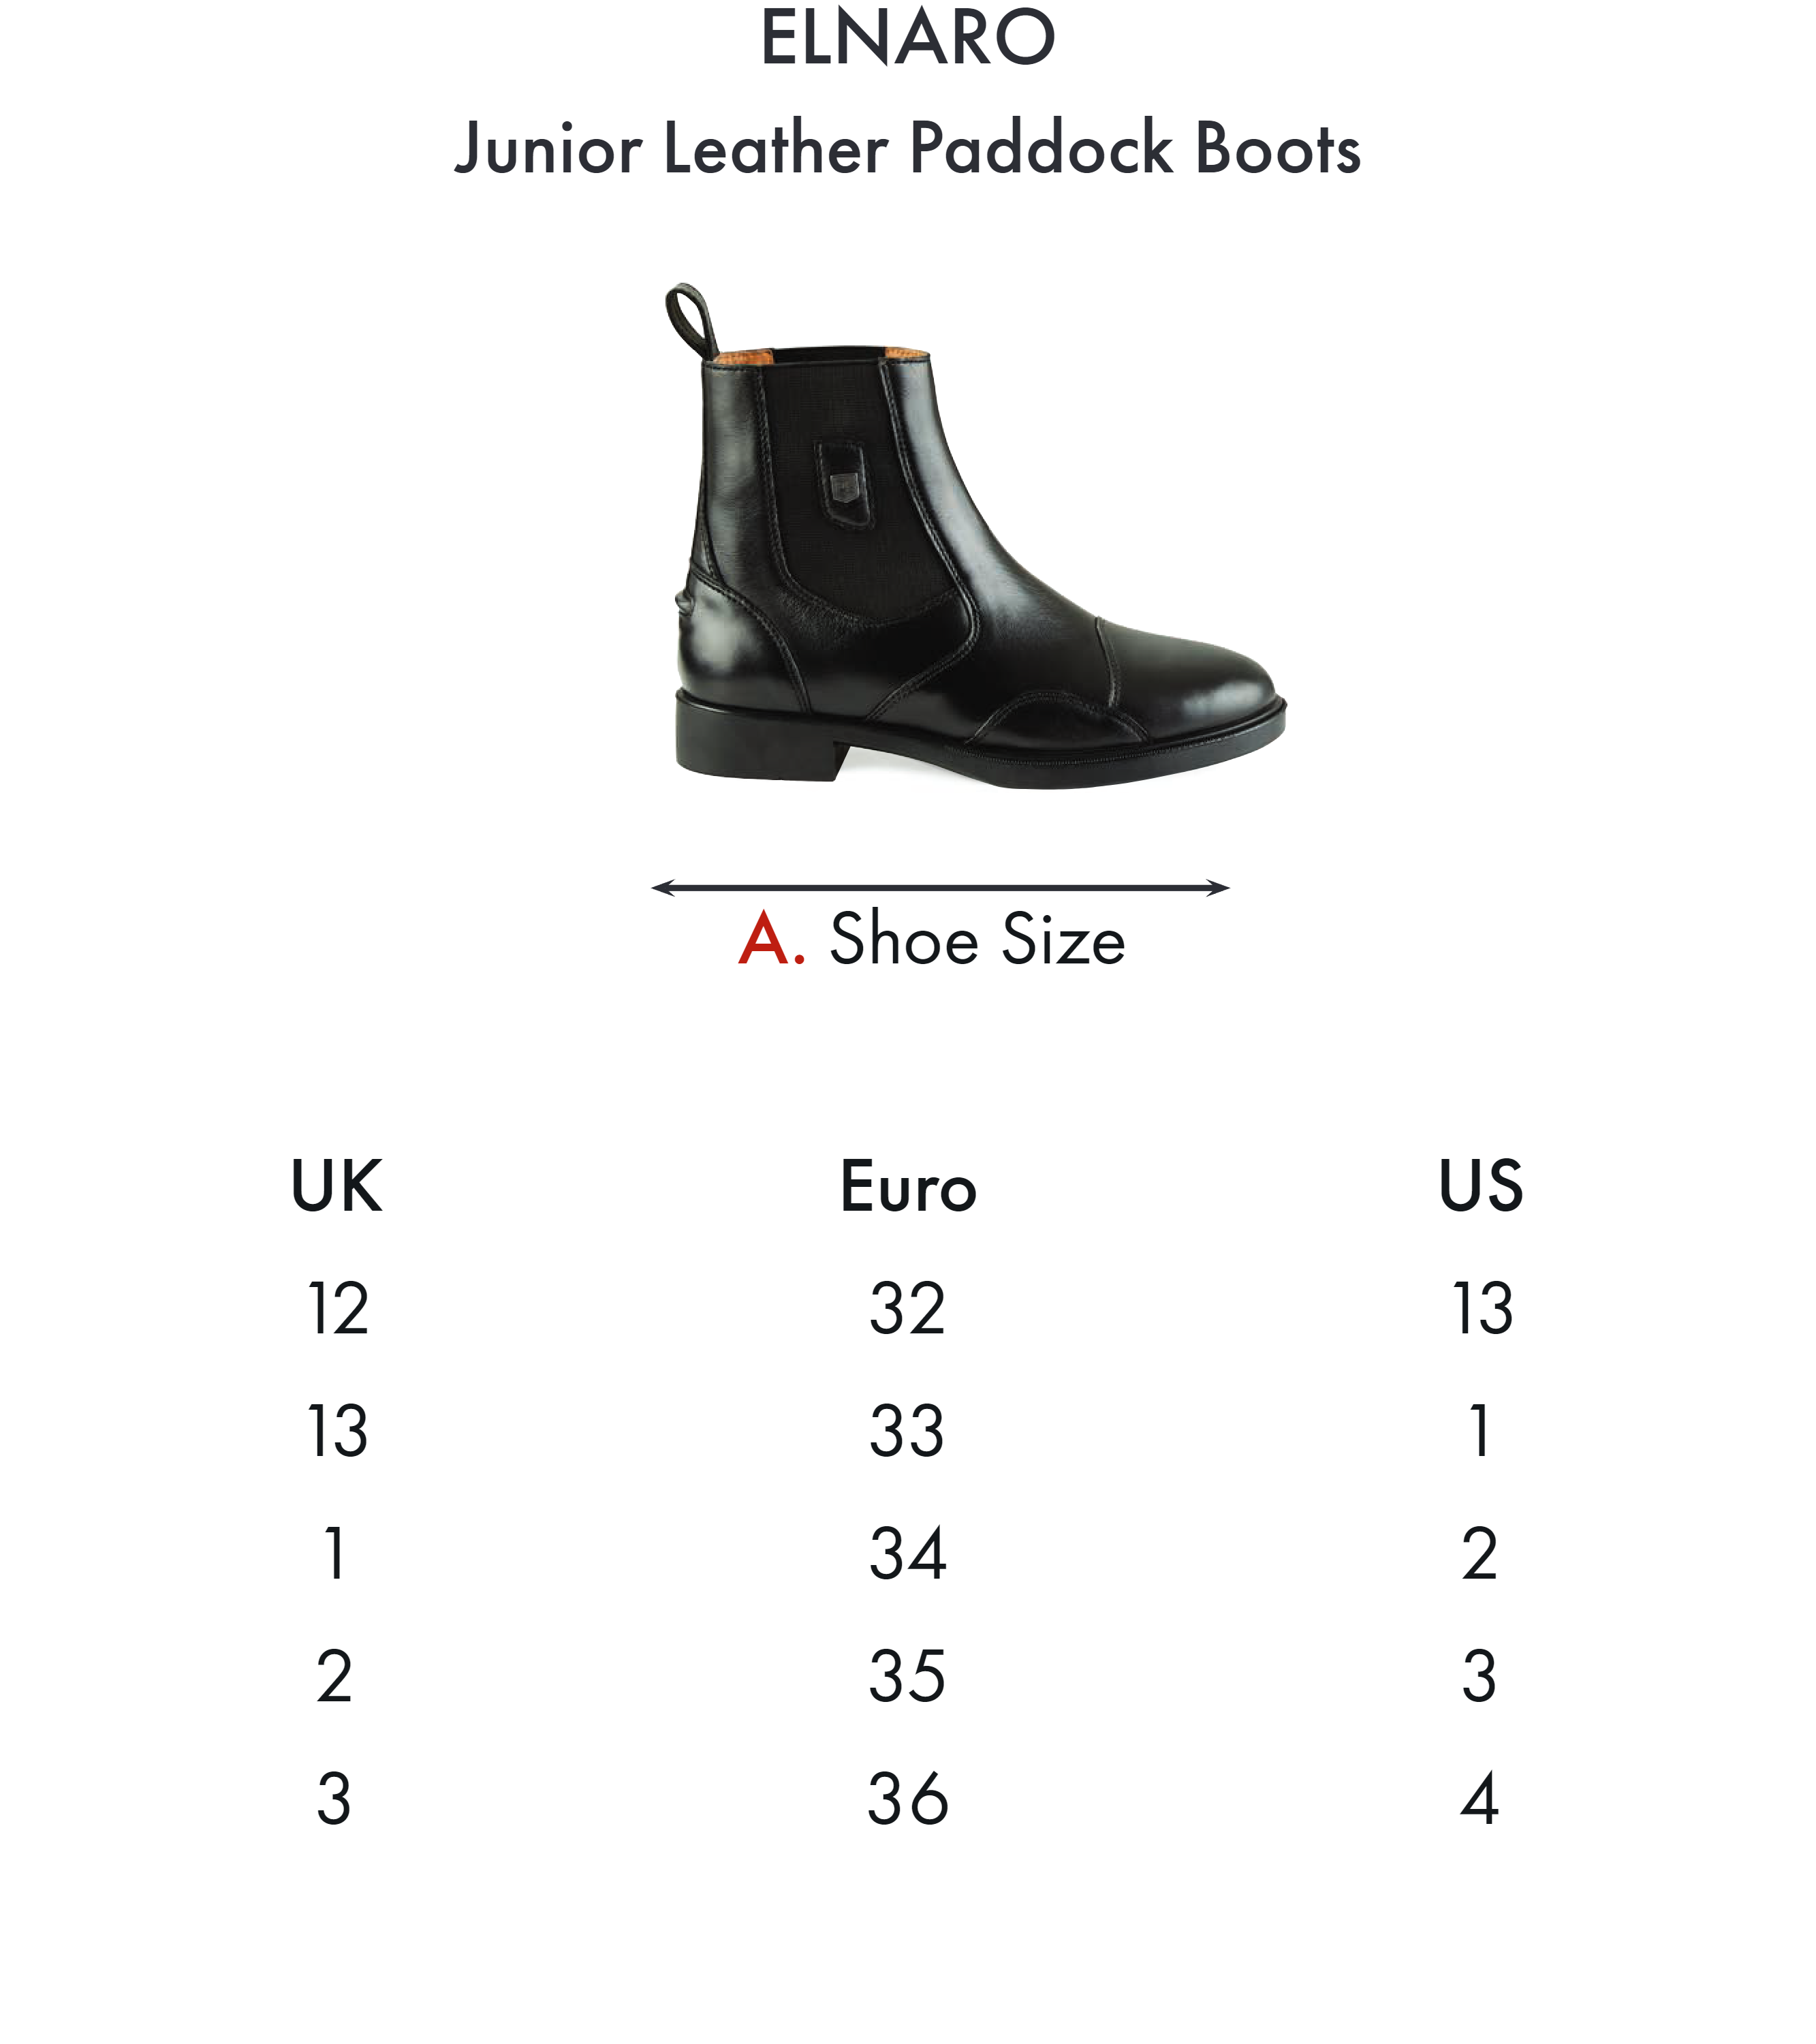 Elnaro Junior Leather Paddock Boot